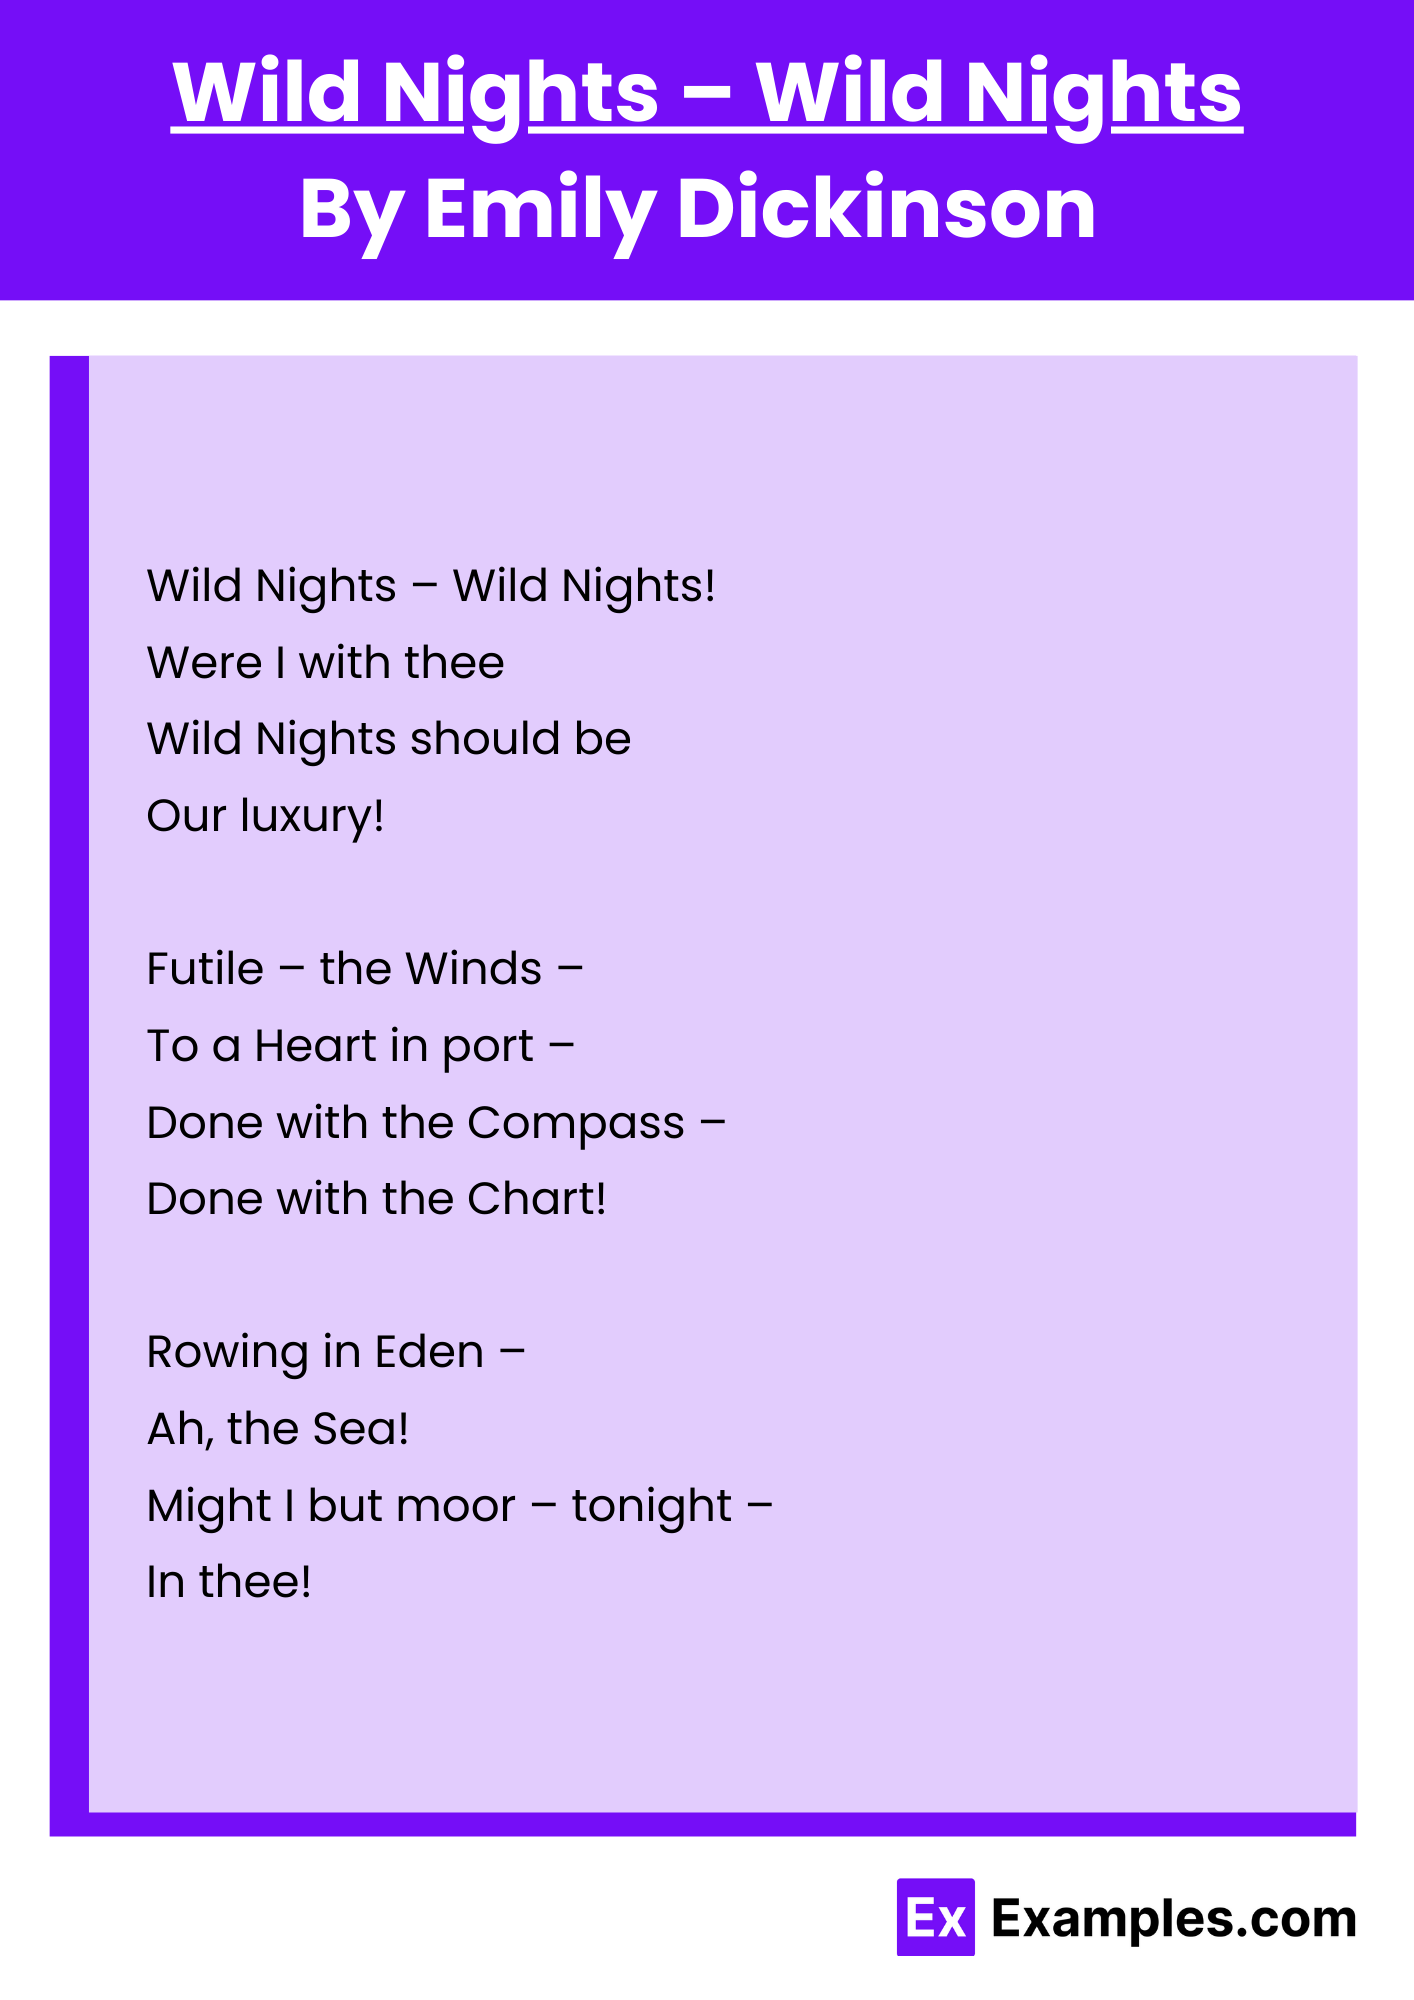 Wild Nights – Wild Nights By Emily Dickinson